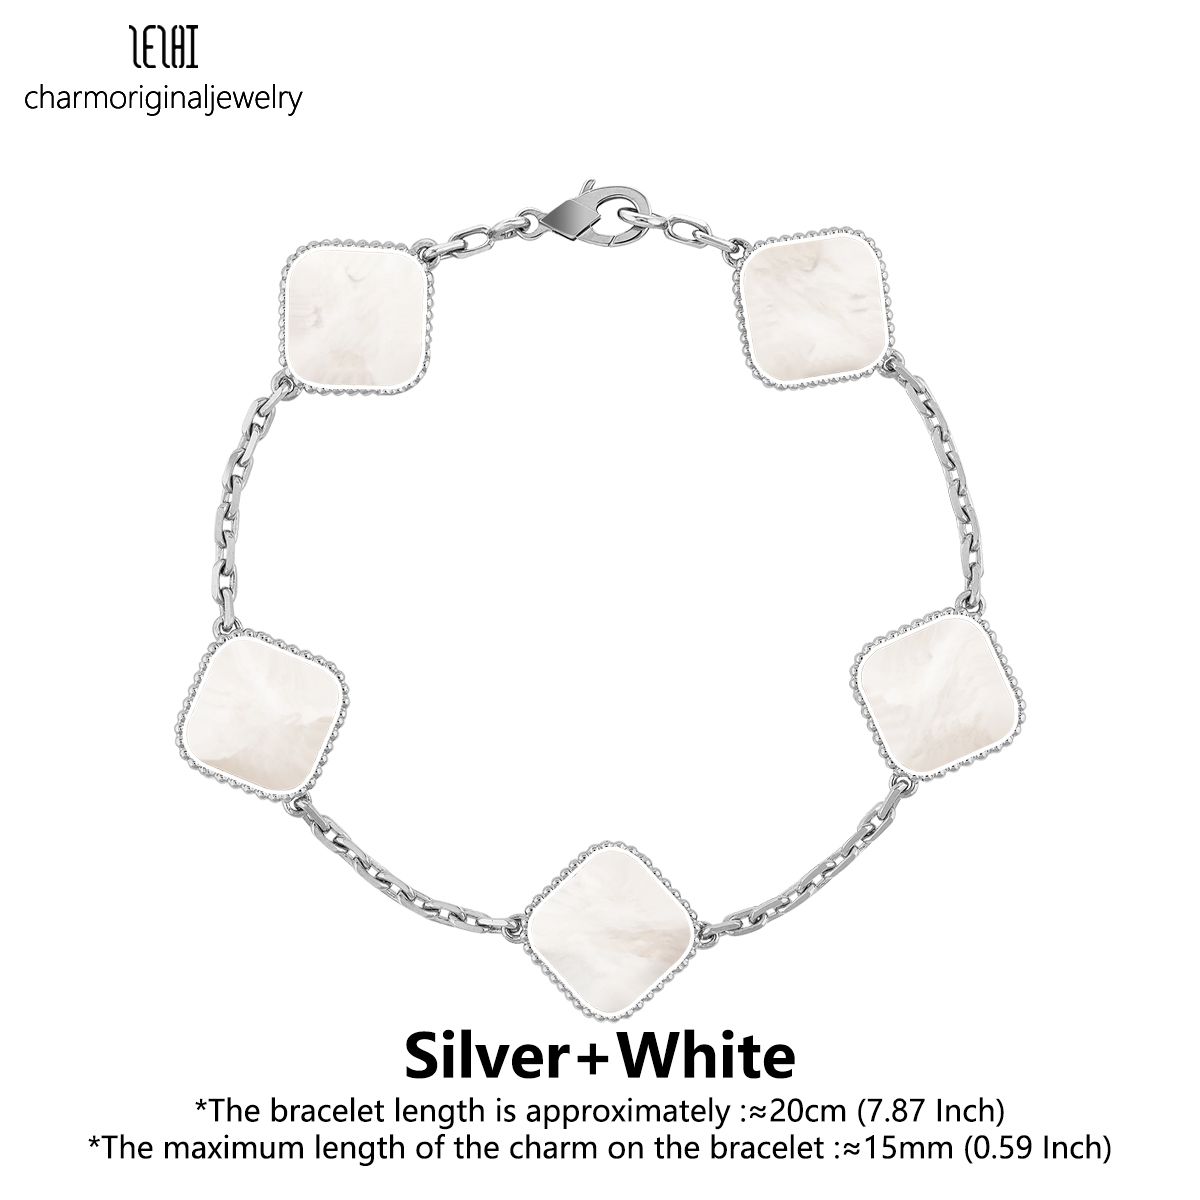 Silver White